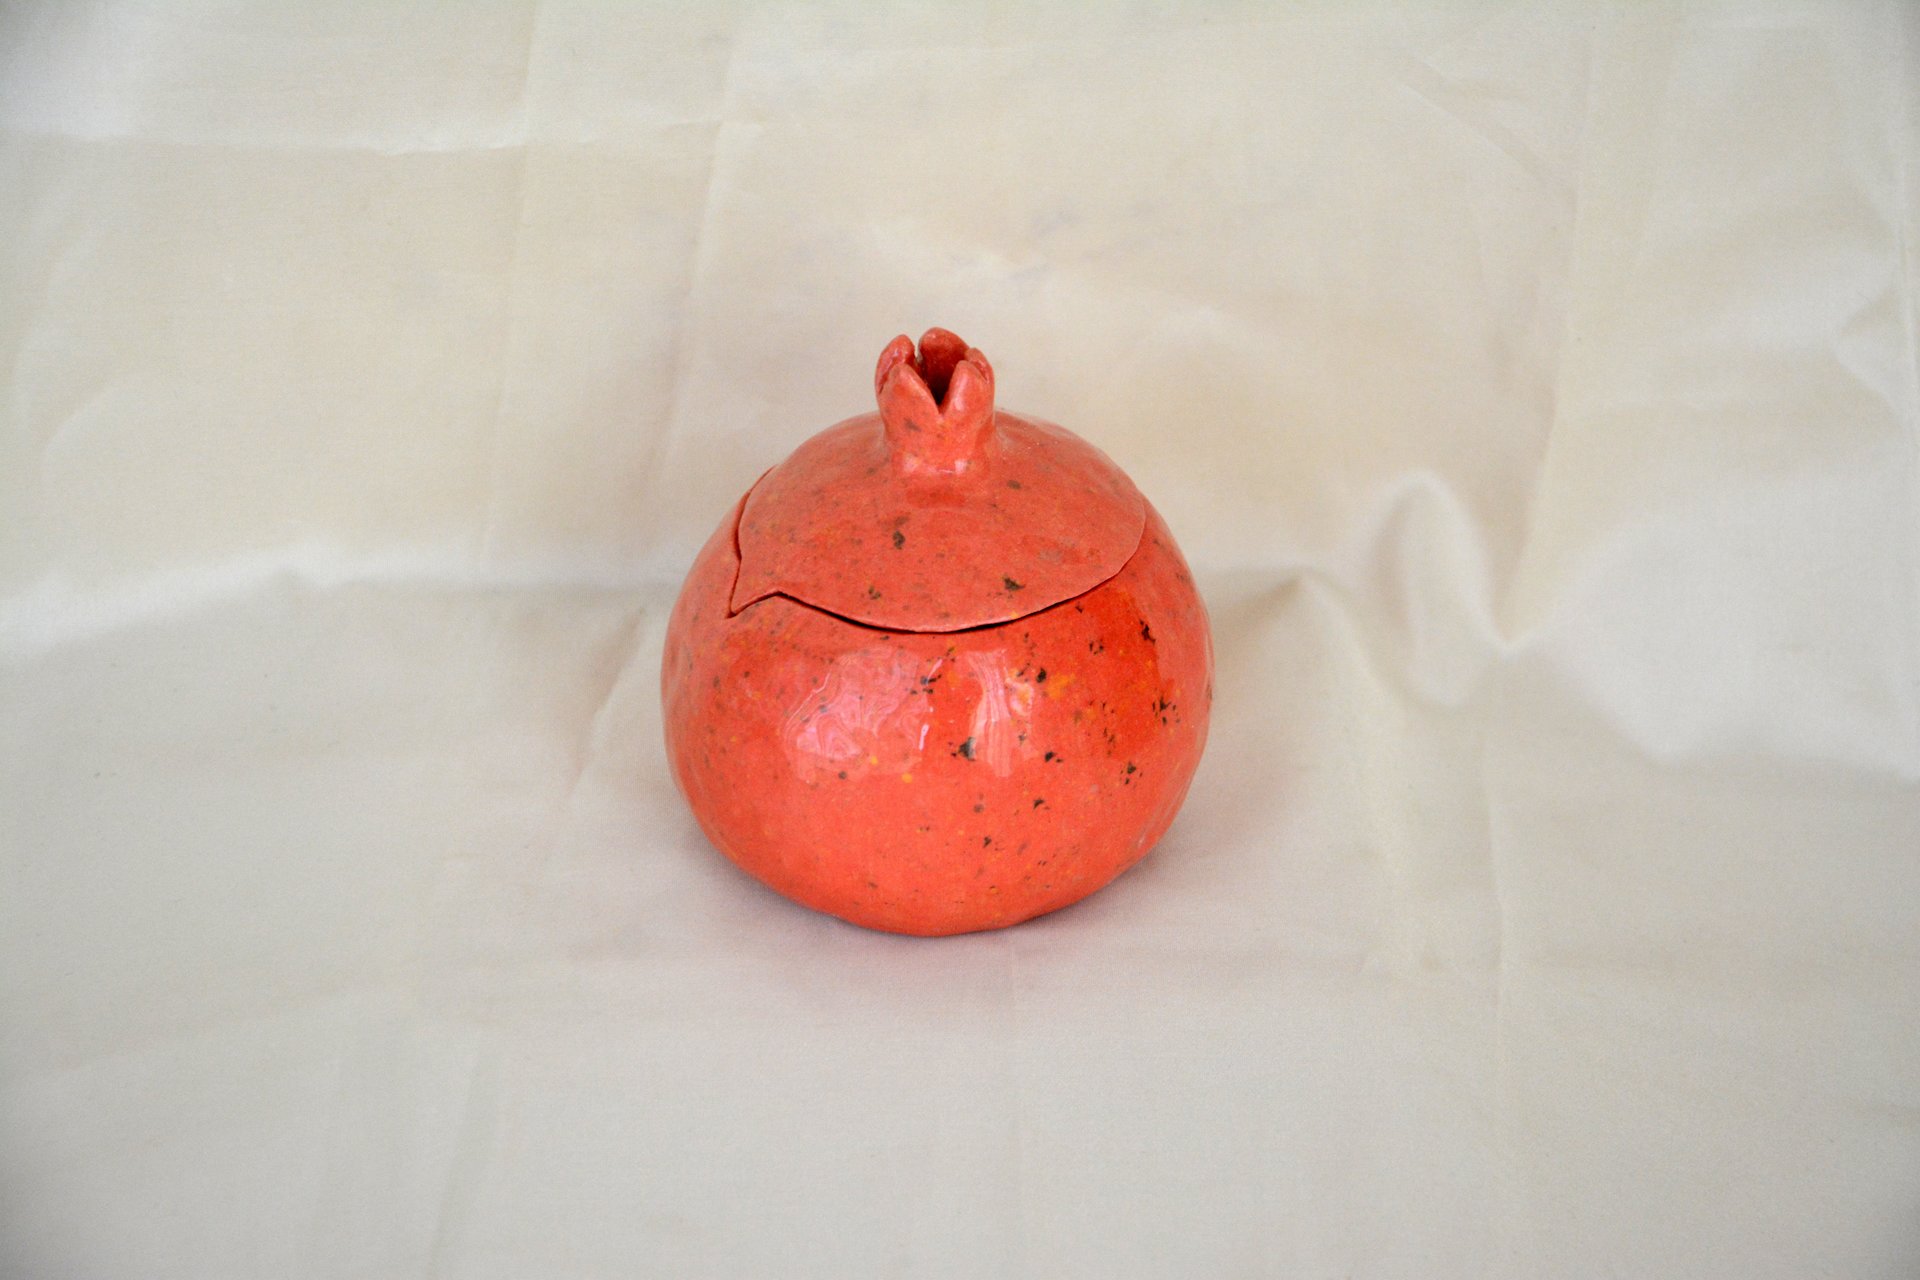 Pink Pomegranate - Ceramic jars, 9.5 cm * 9.5 cm, height - 10 cm, photo 1 of 2.